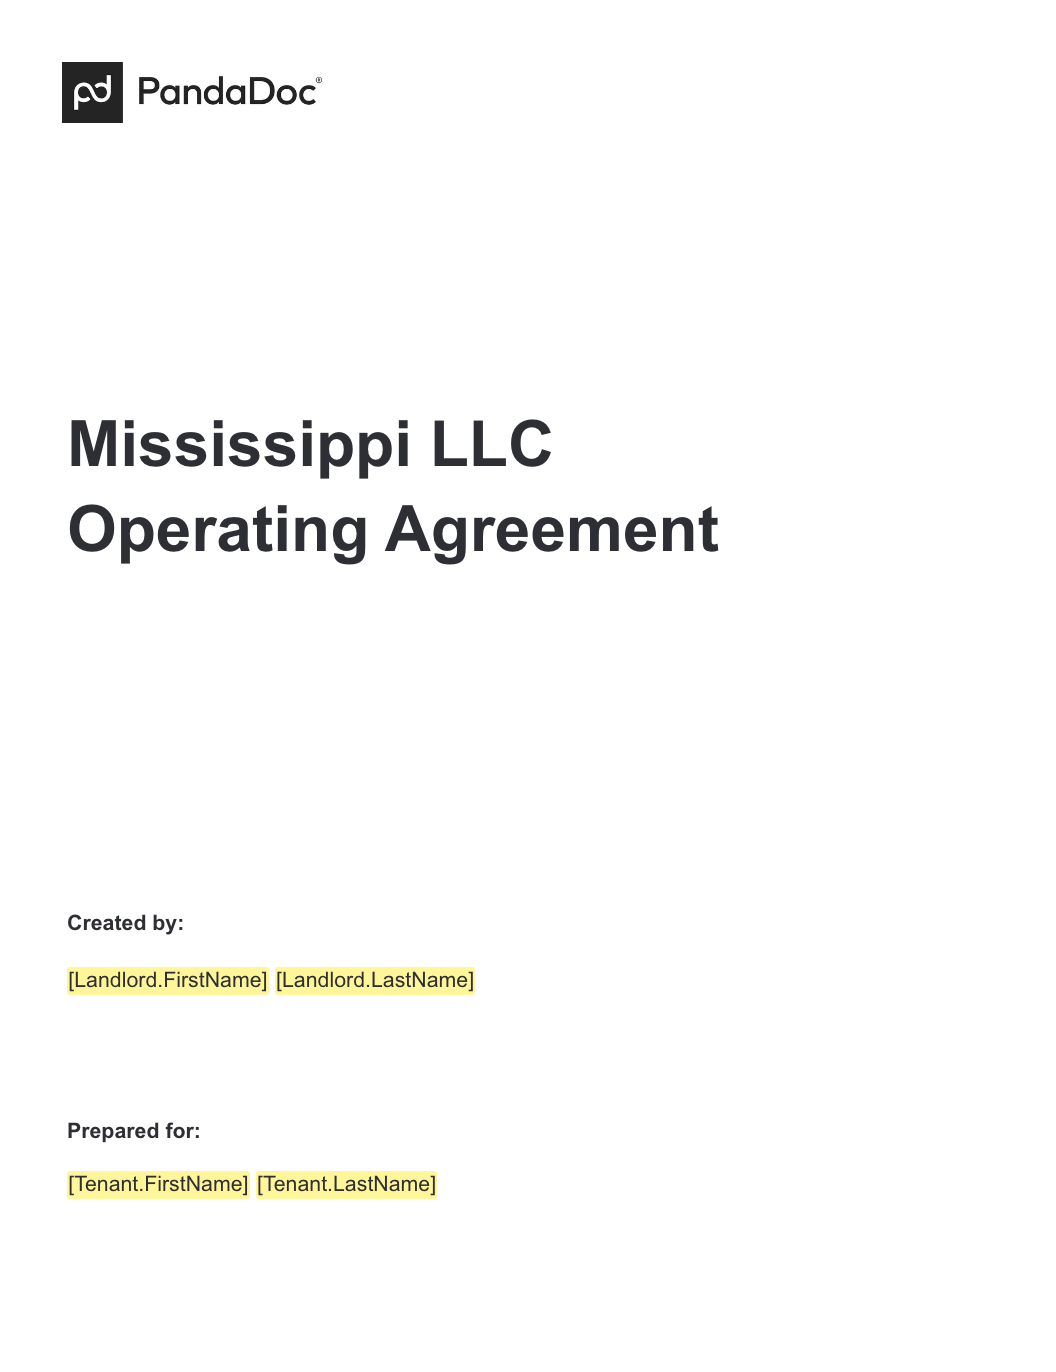 Mississippi LLC Operating Agreement 